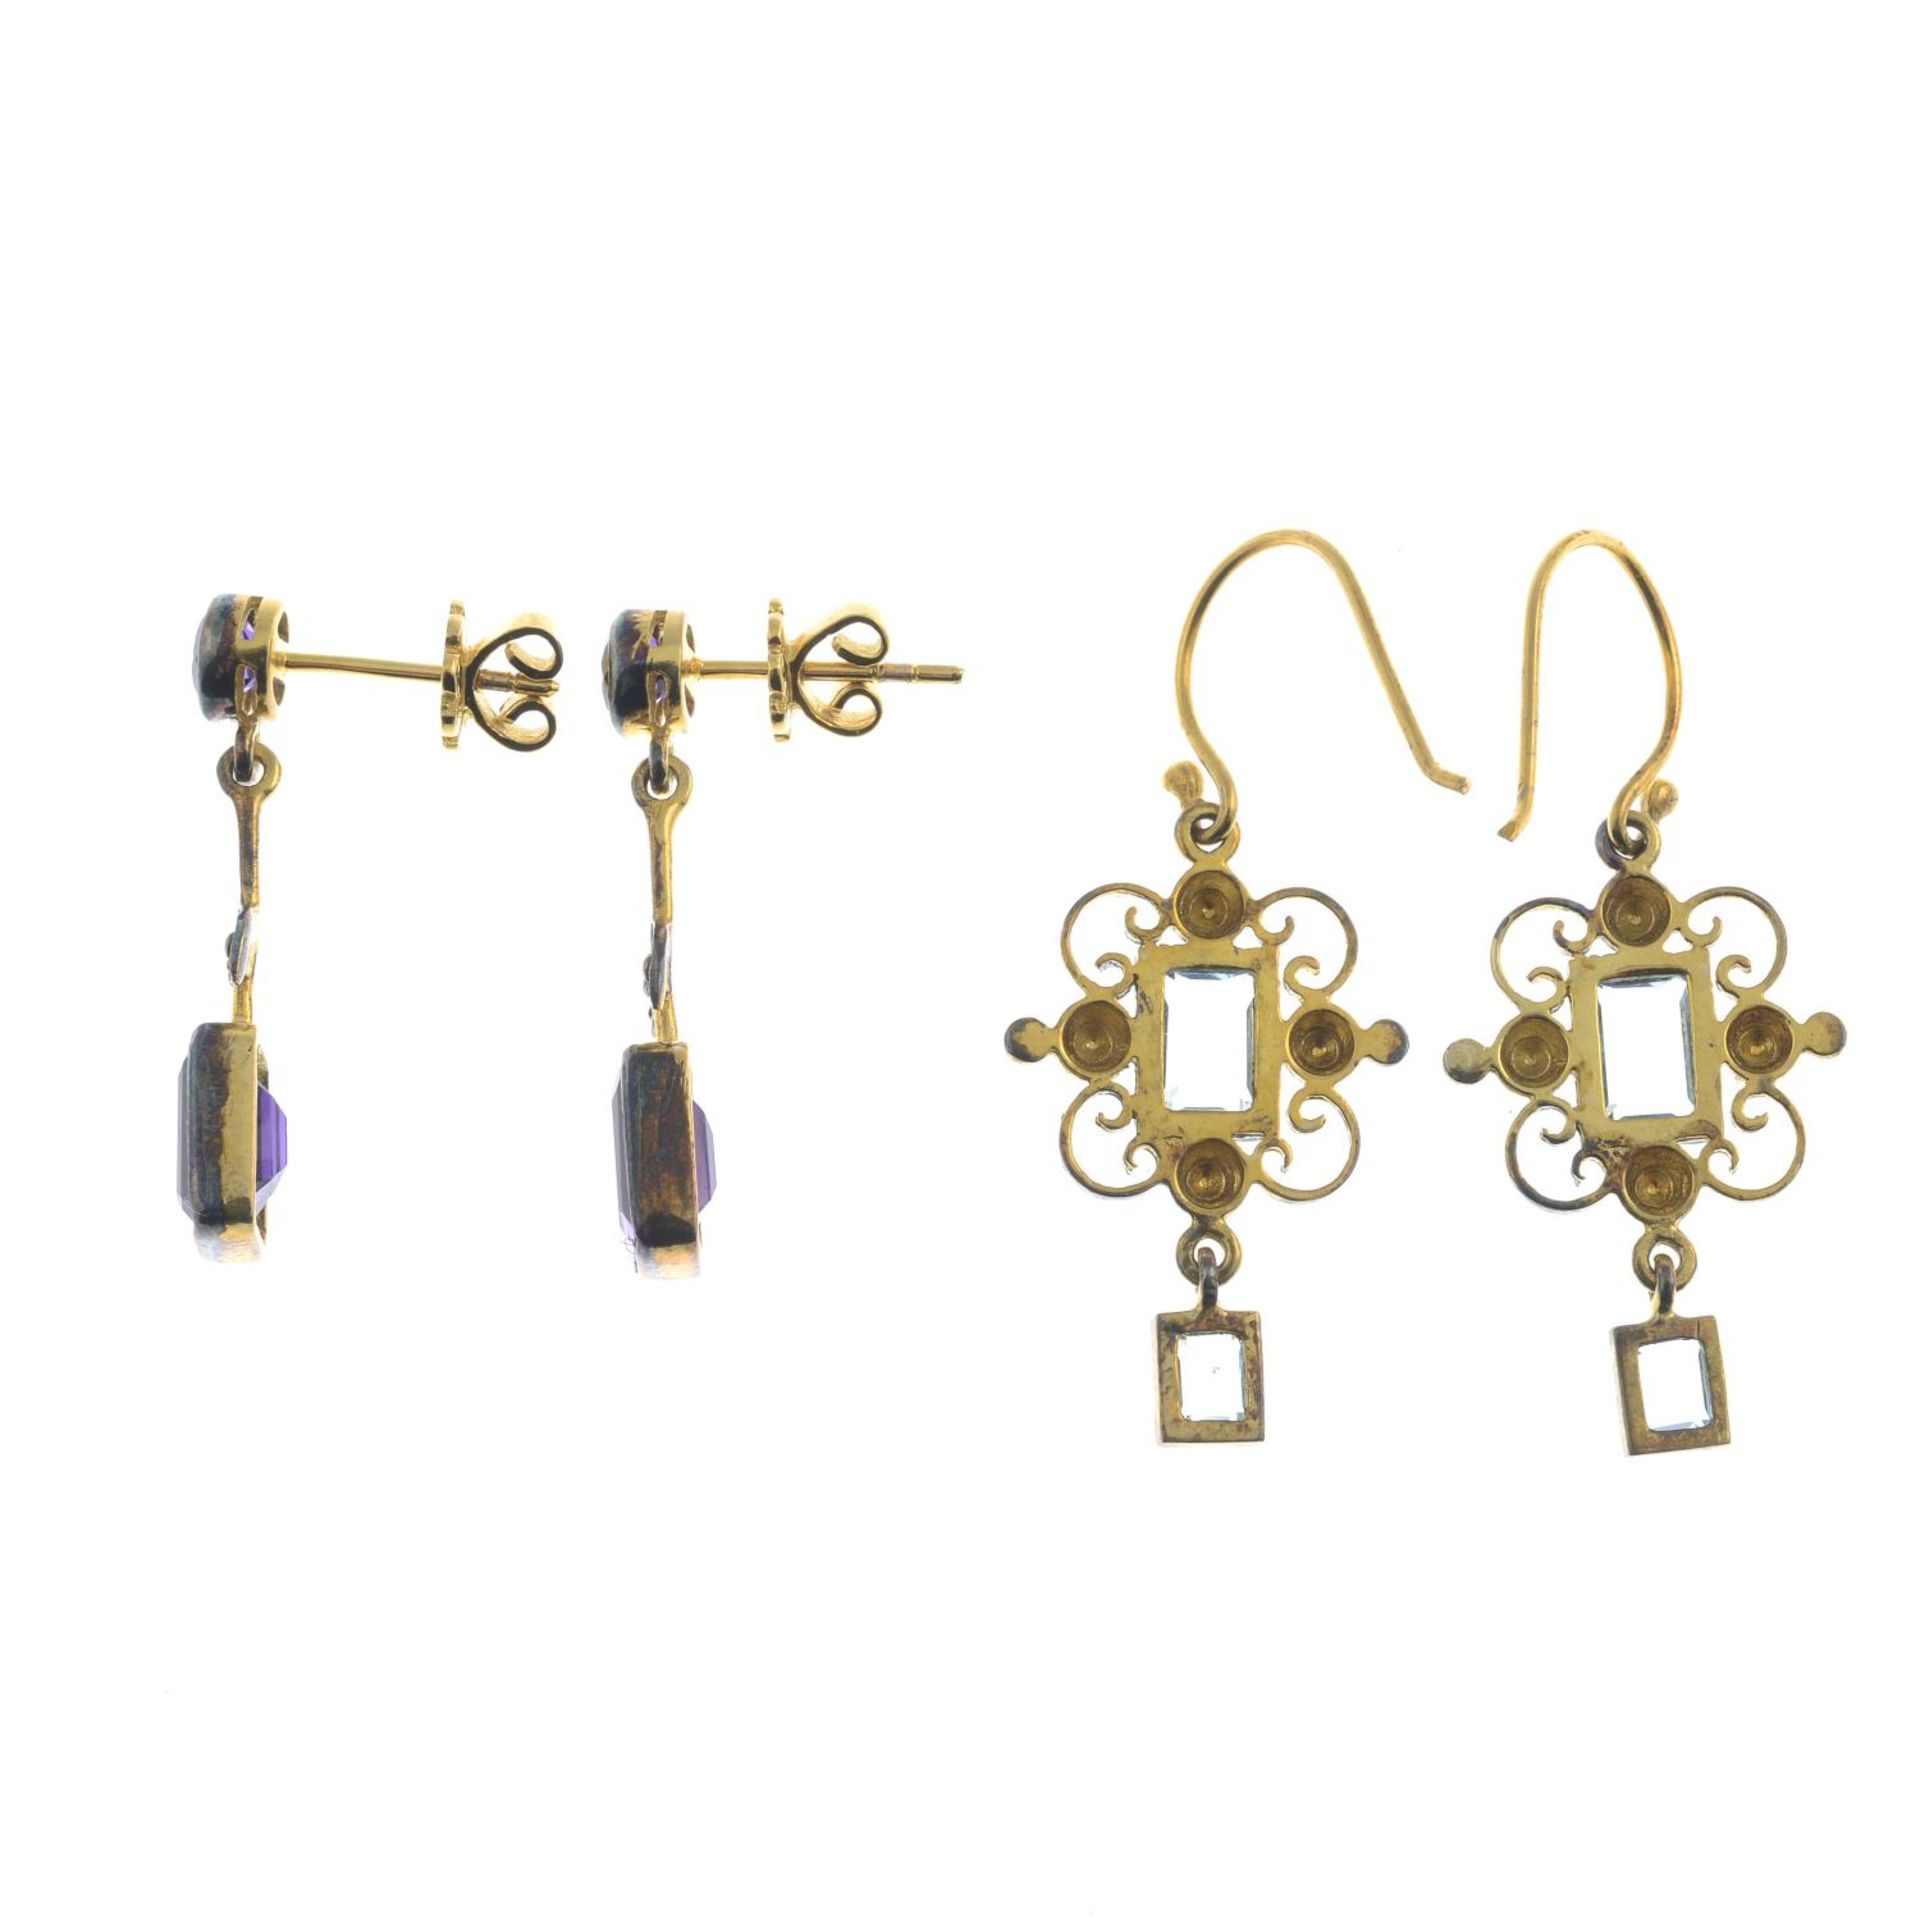 Amethyst earrings, length 2.8cms. - Bild 2 aus 2